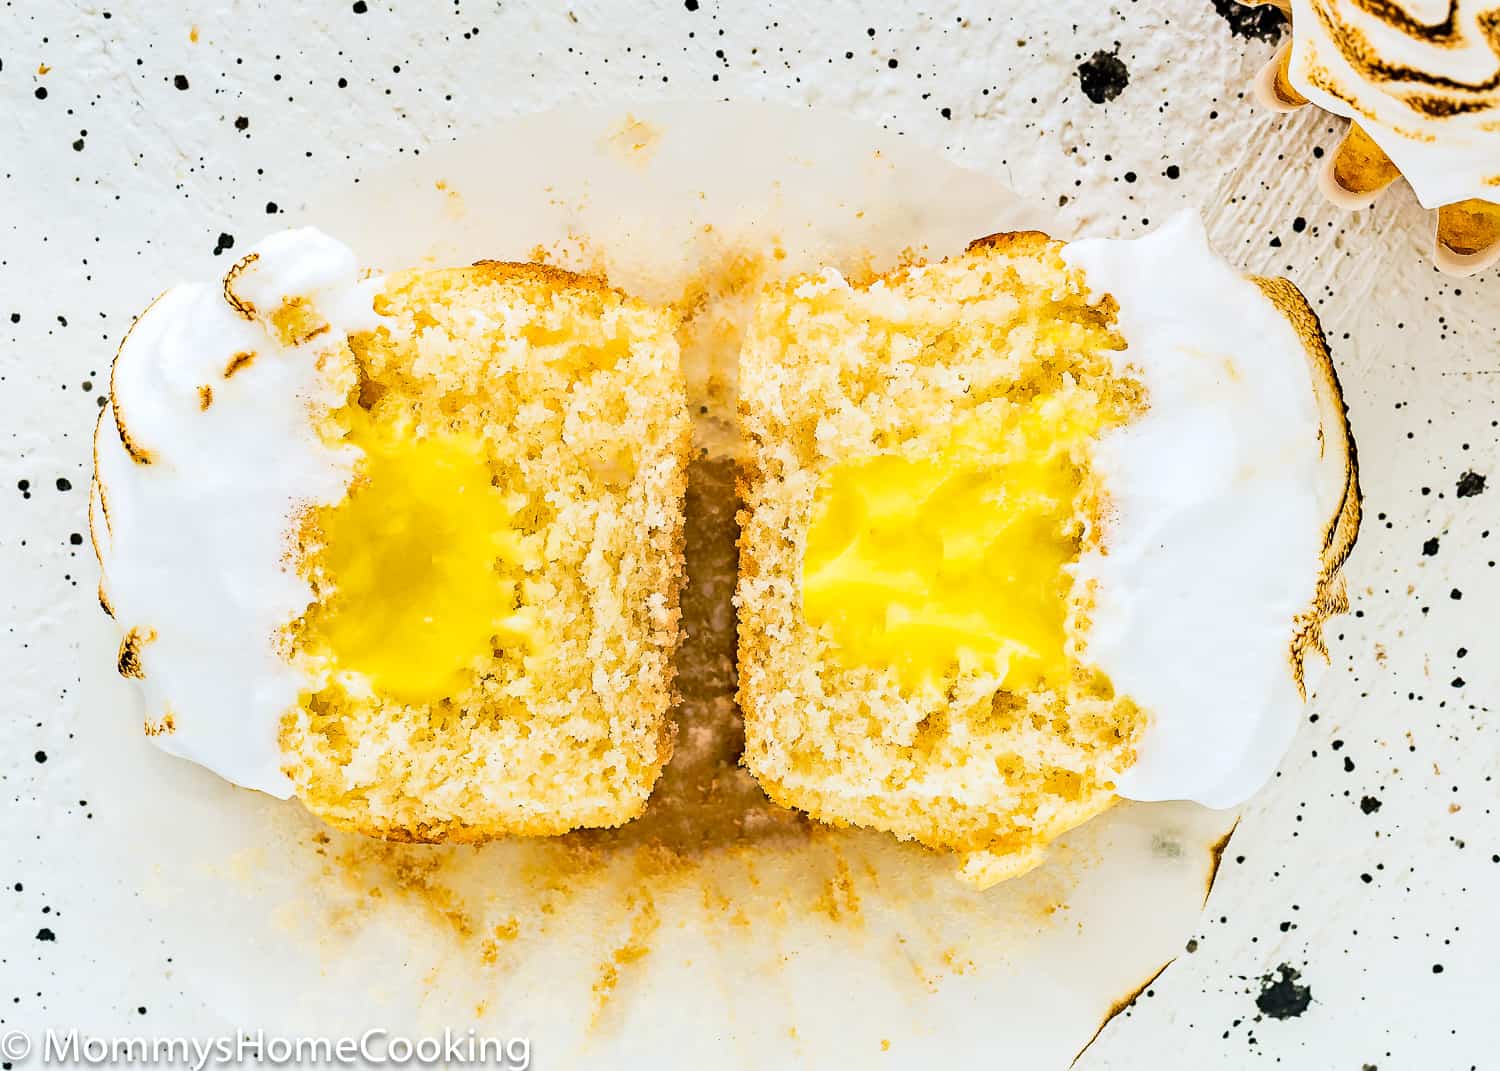 Eggless Lemon Meringue Cupcake half opened showing its inner texture.